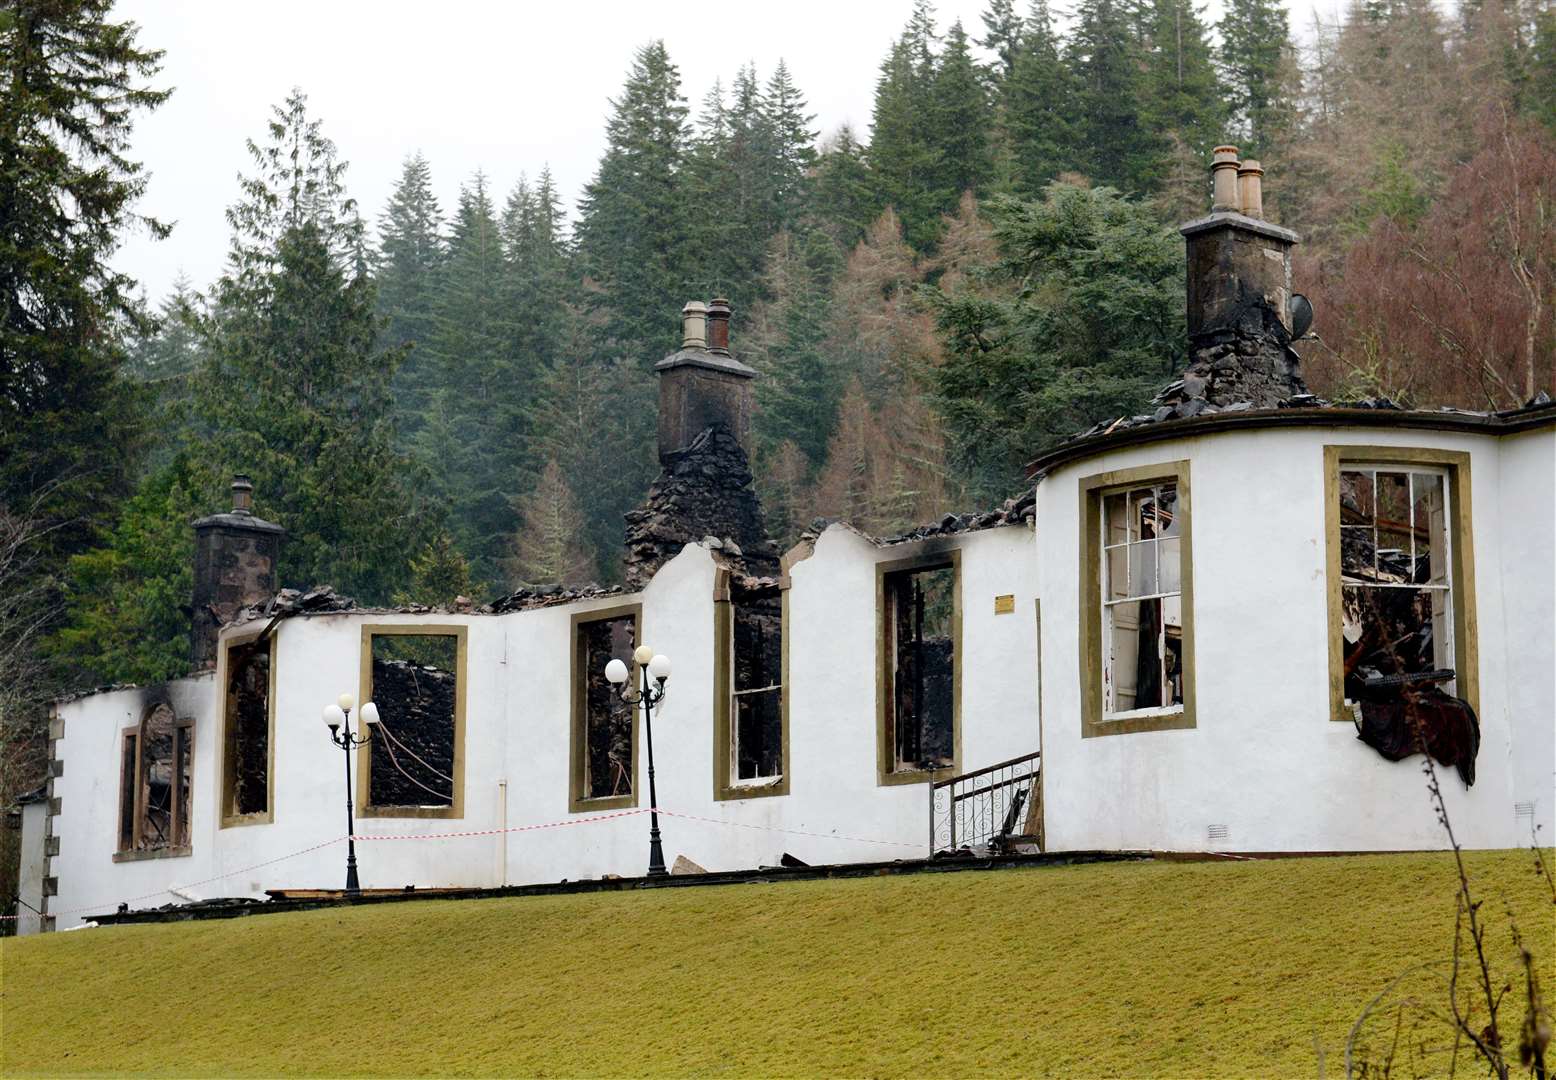 B-listed Boleskine House was damaged by a blaze in 2015.